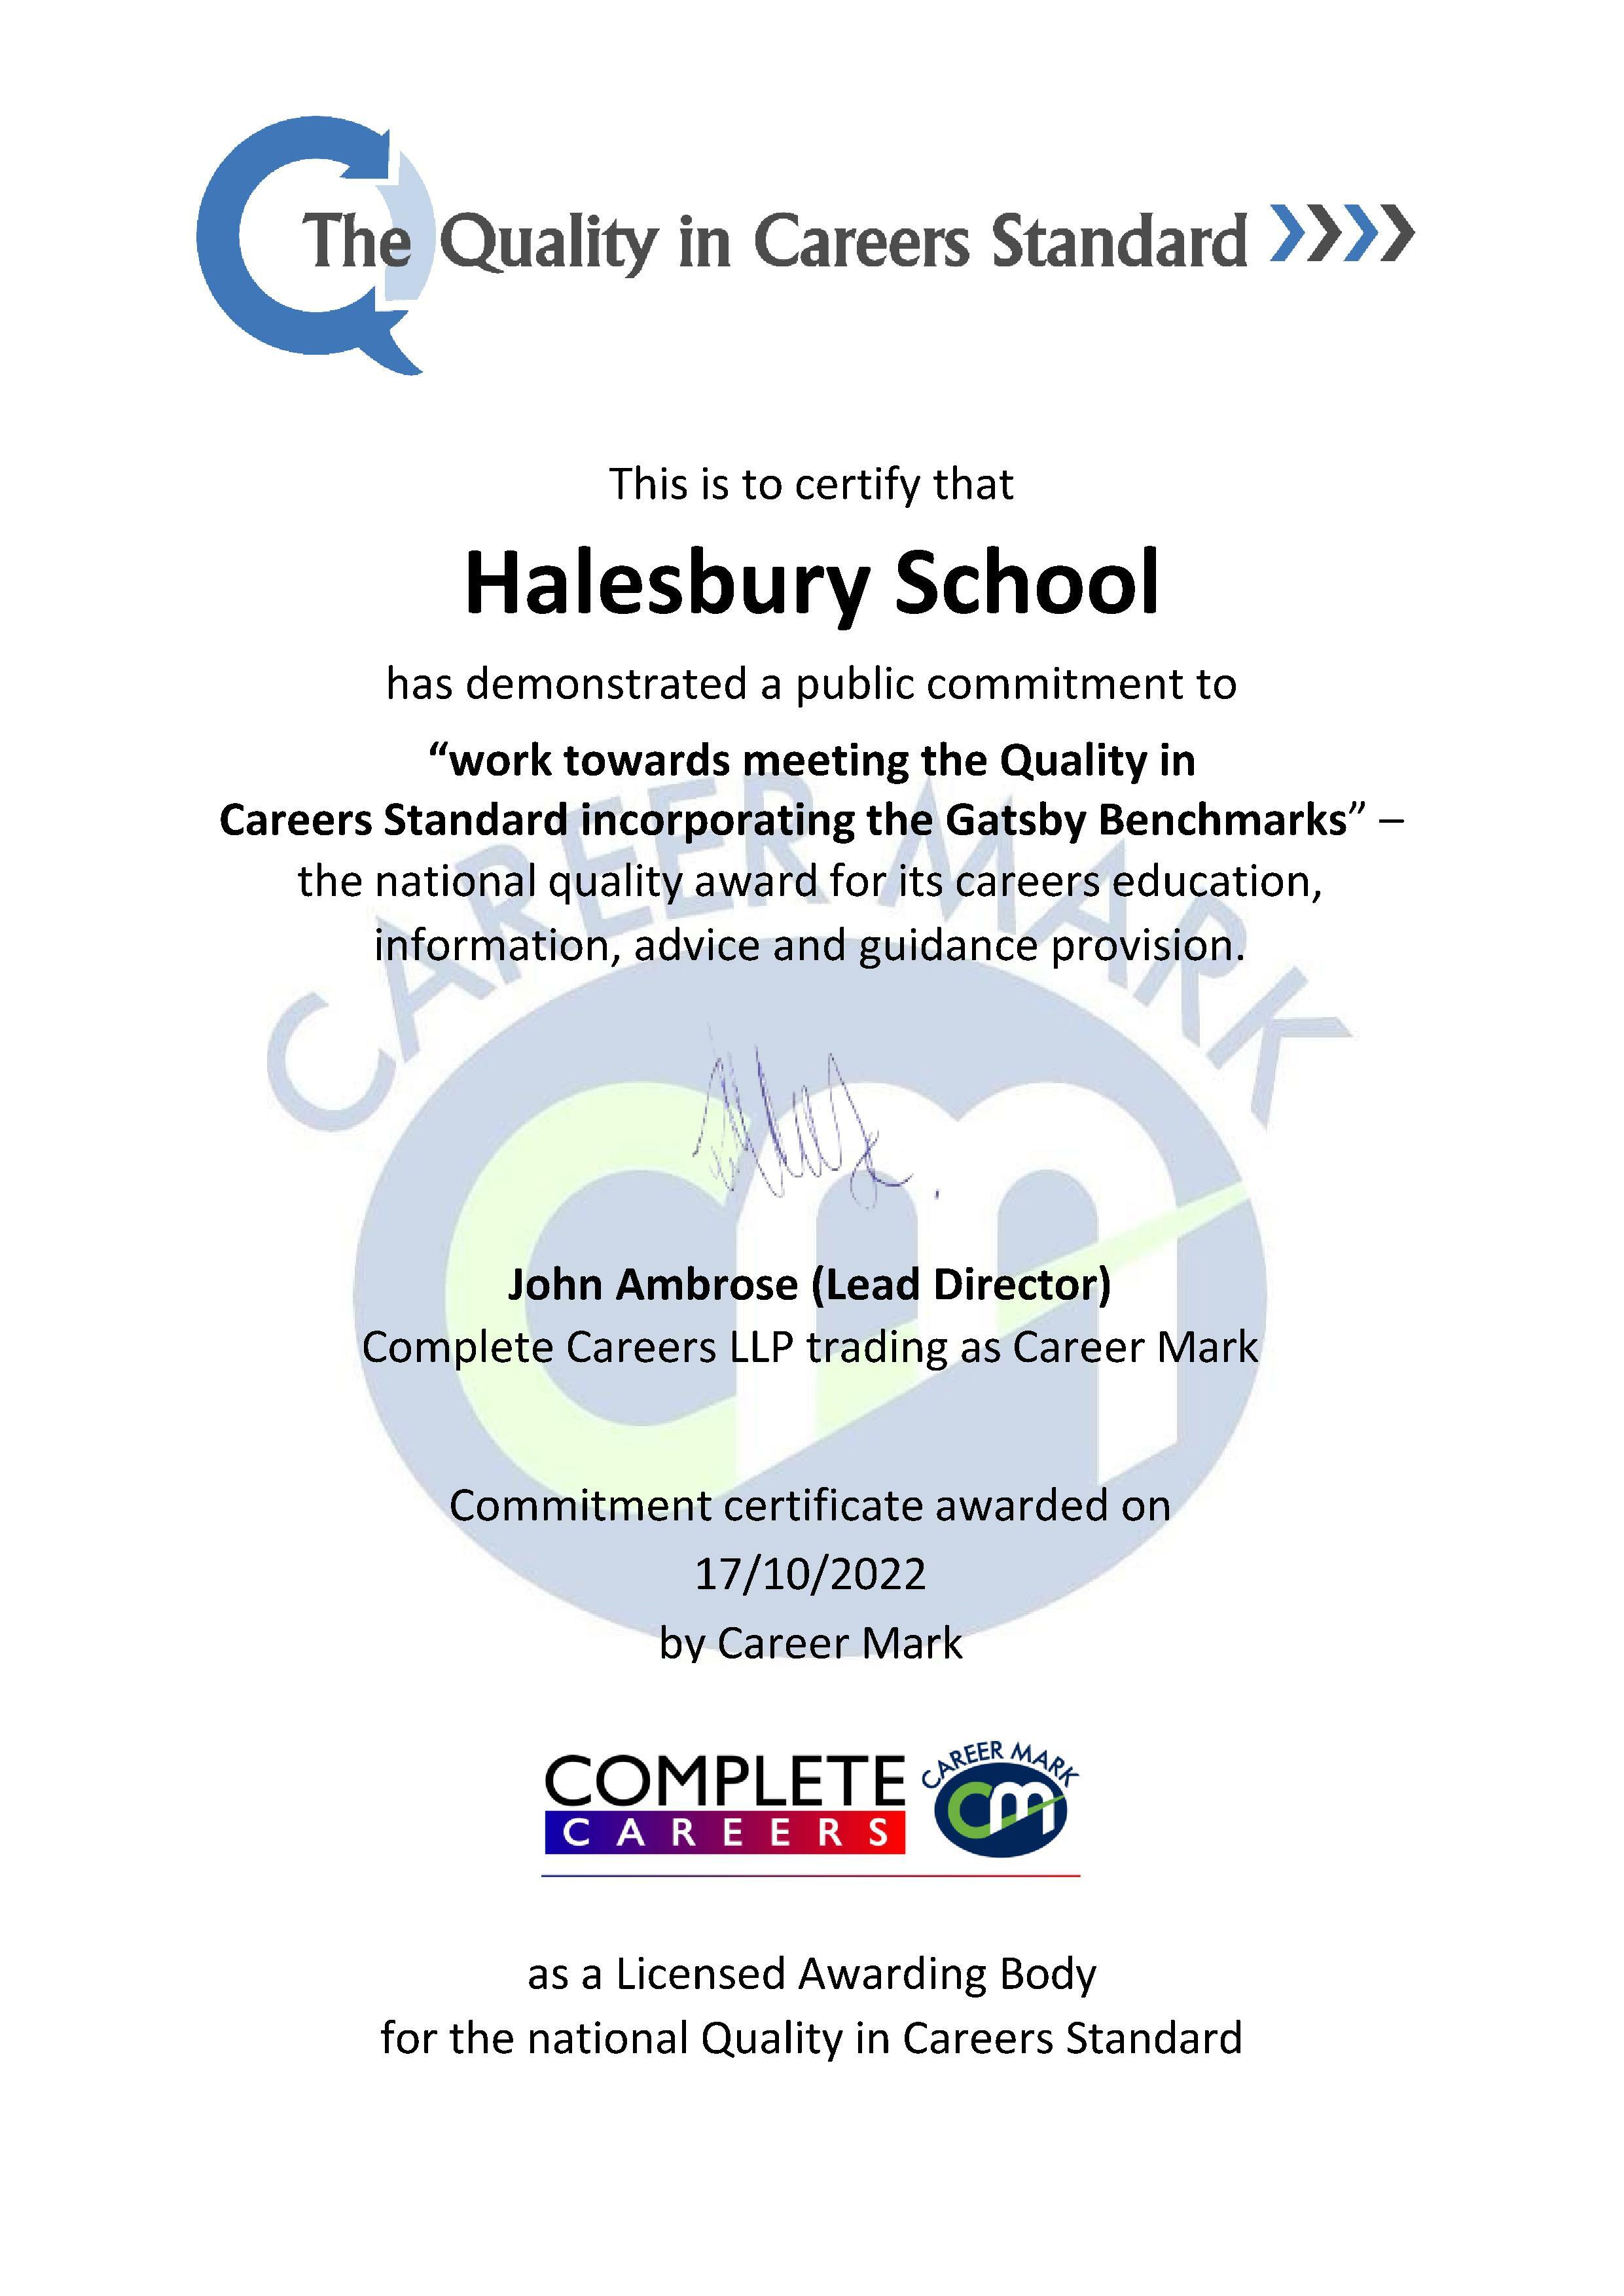 Halesbury School Certificate of Commitment